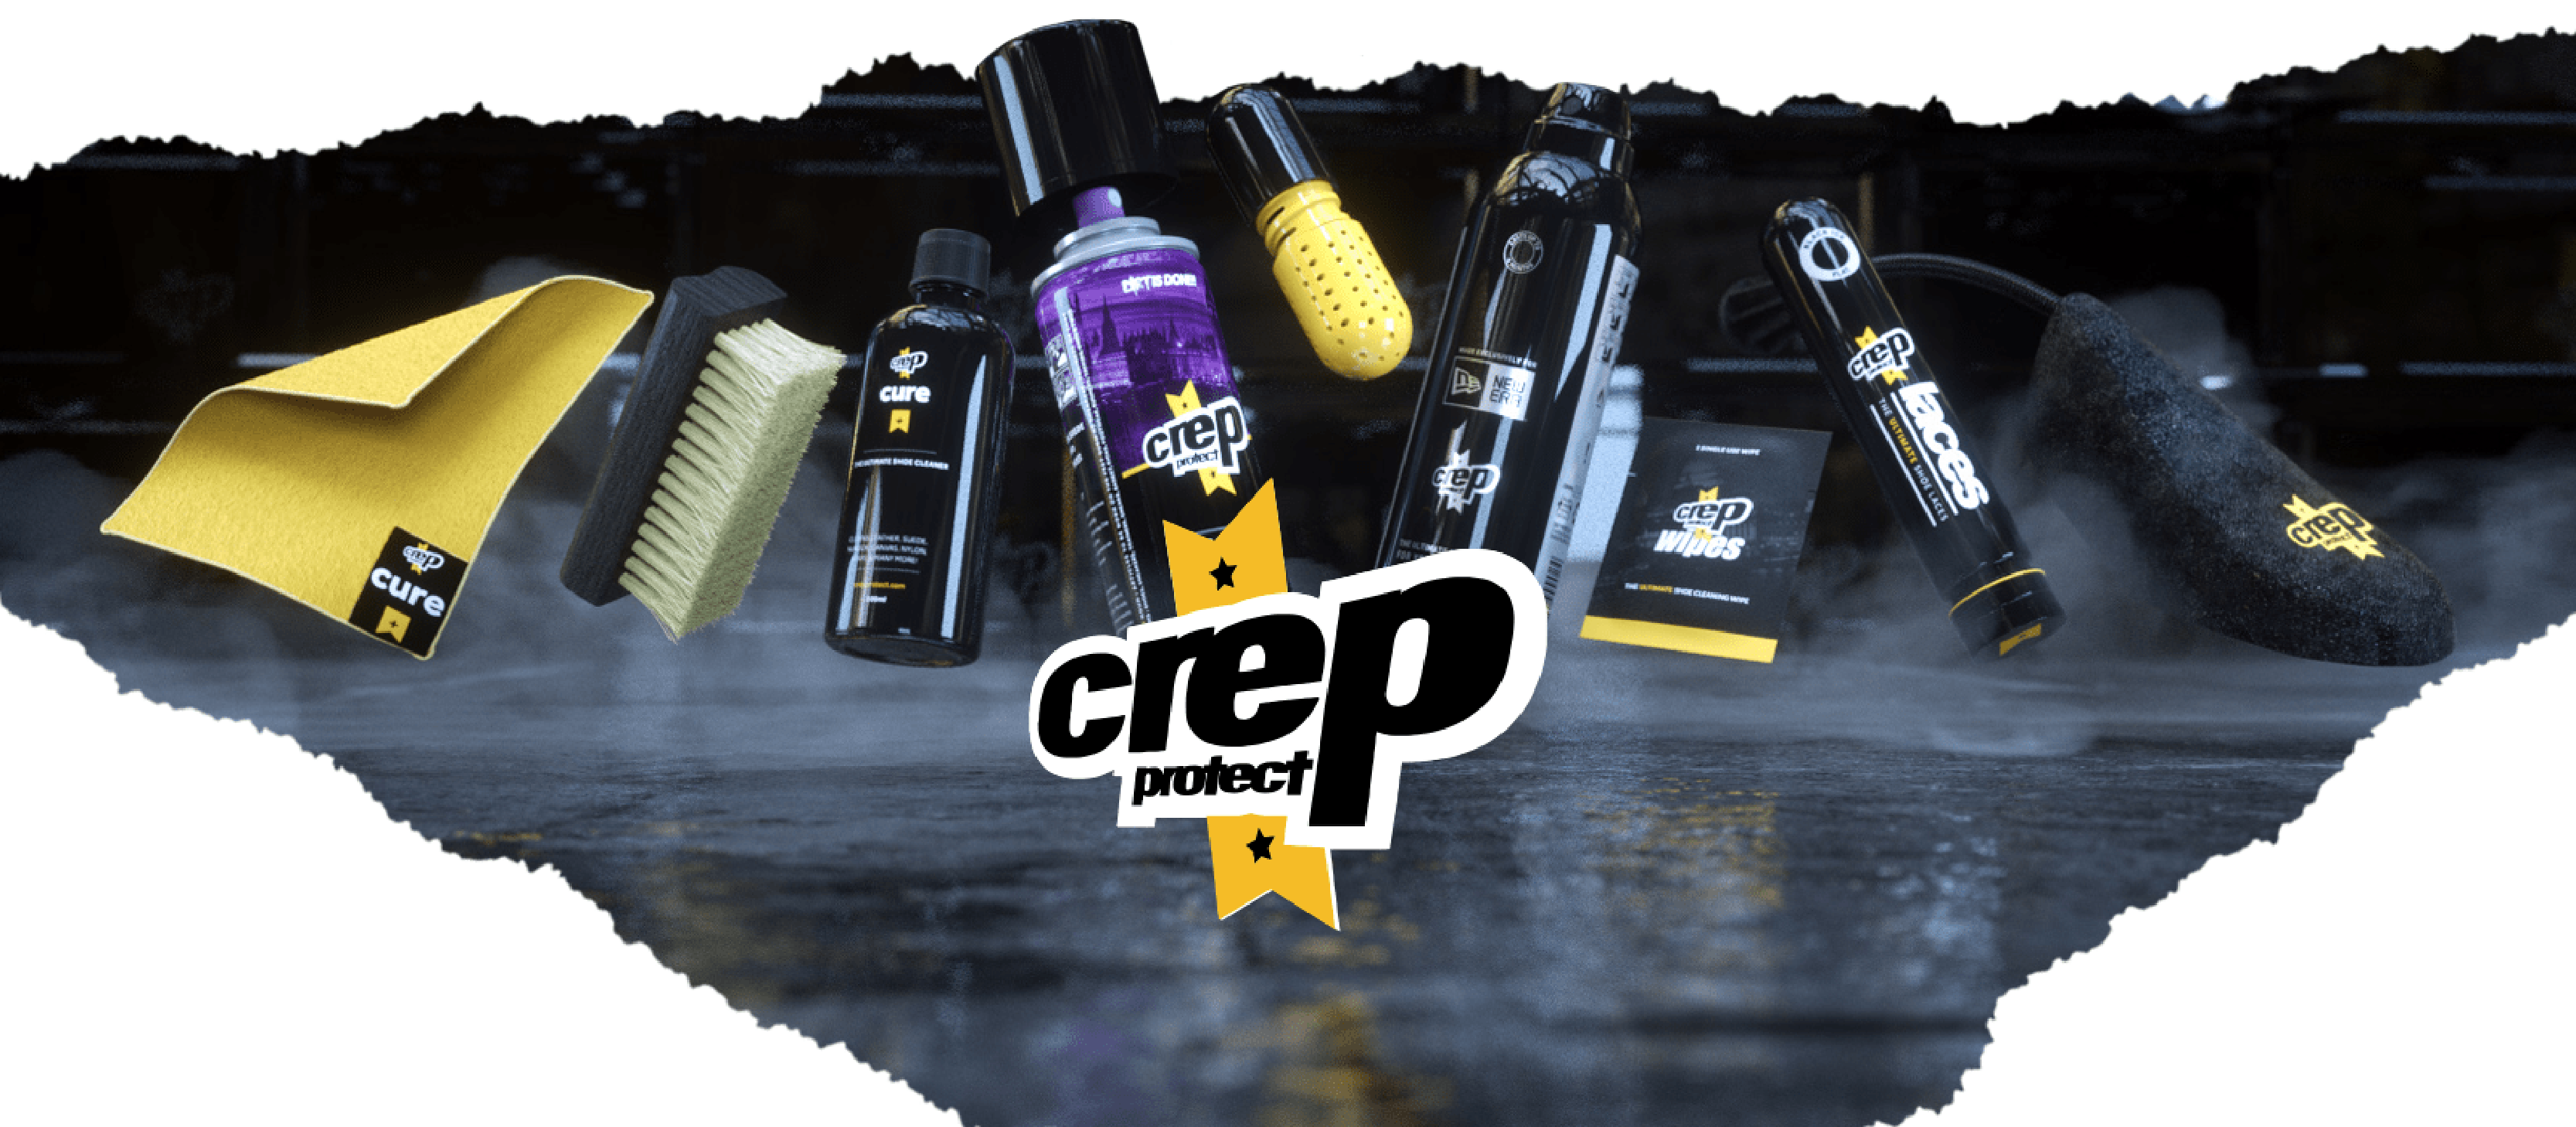 Crep Protect – The Liquor SB